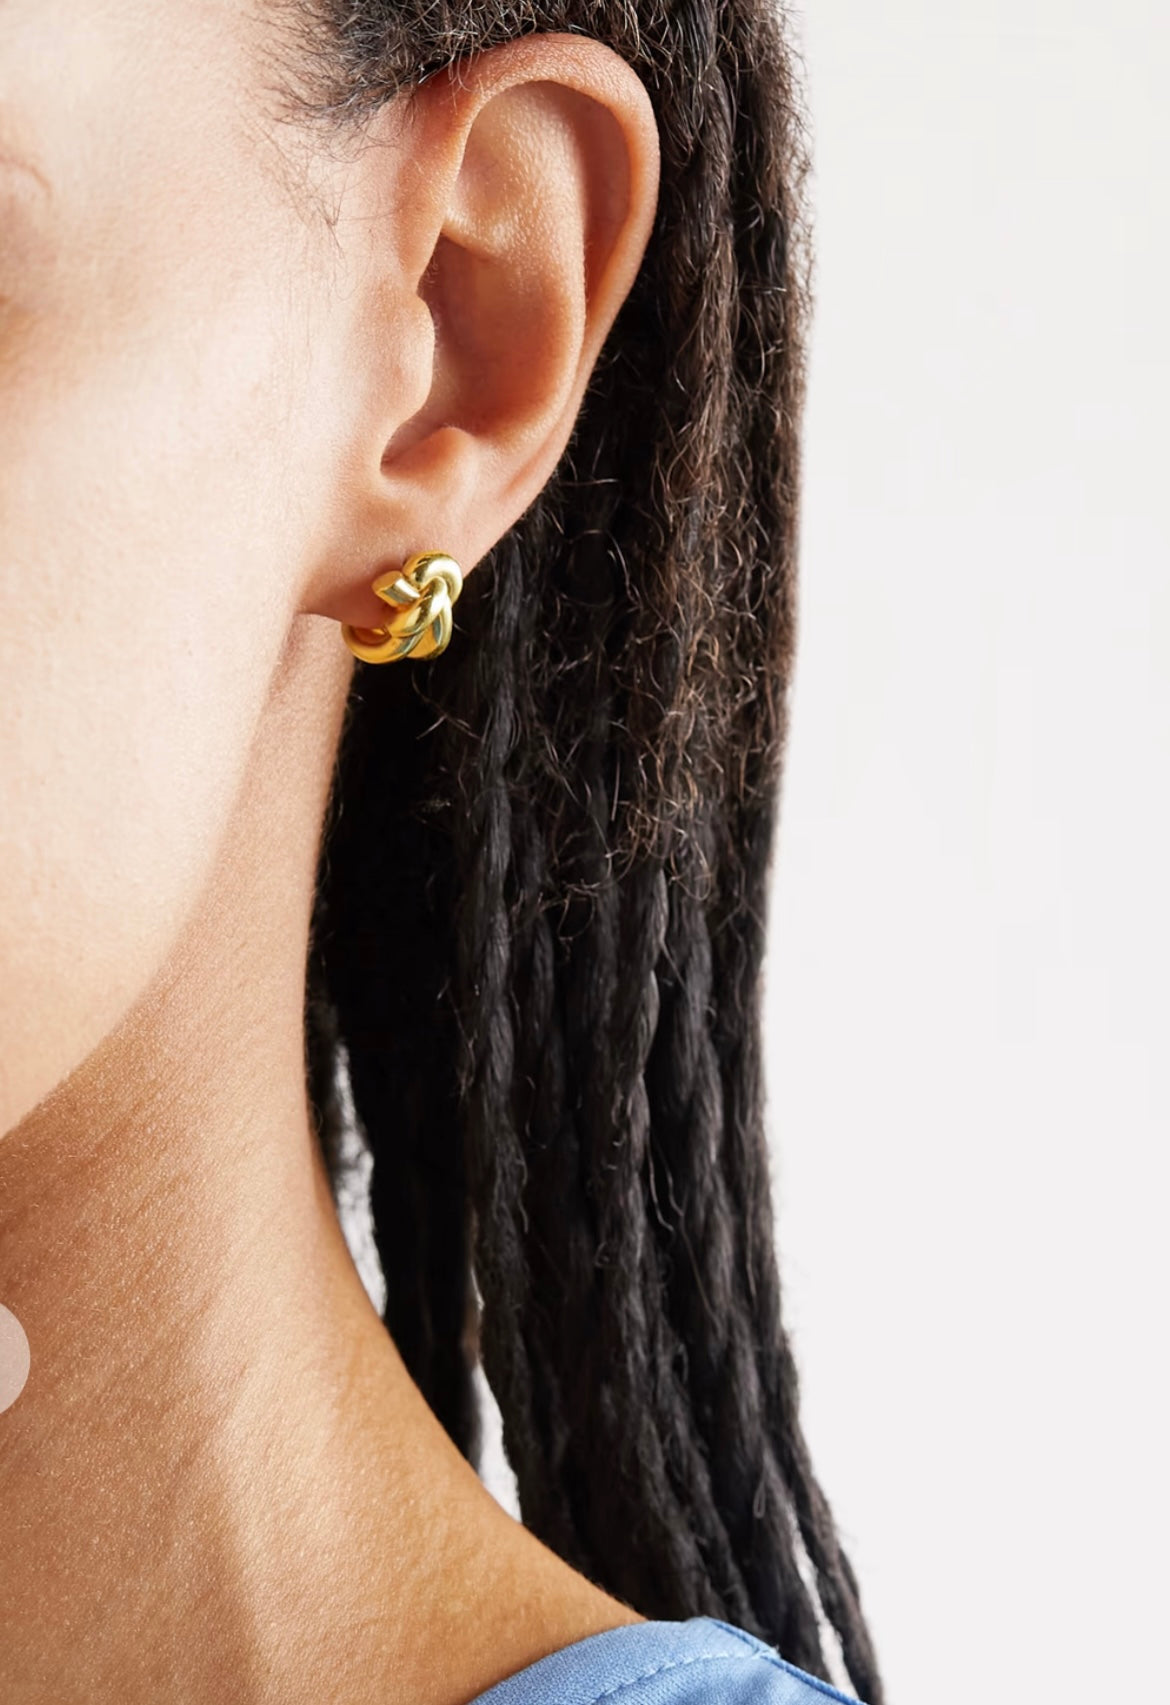 Bottega Veneta Gold-plated earrings Stud Earrings